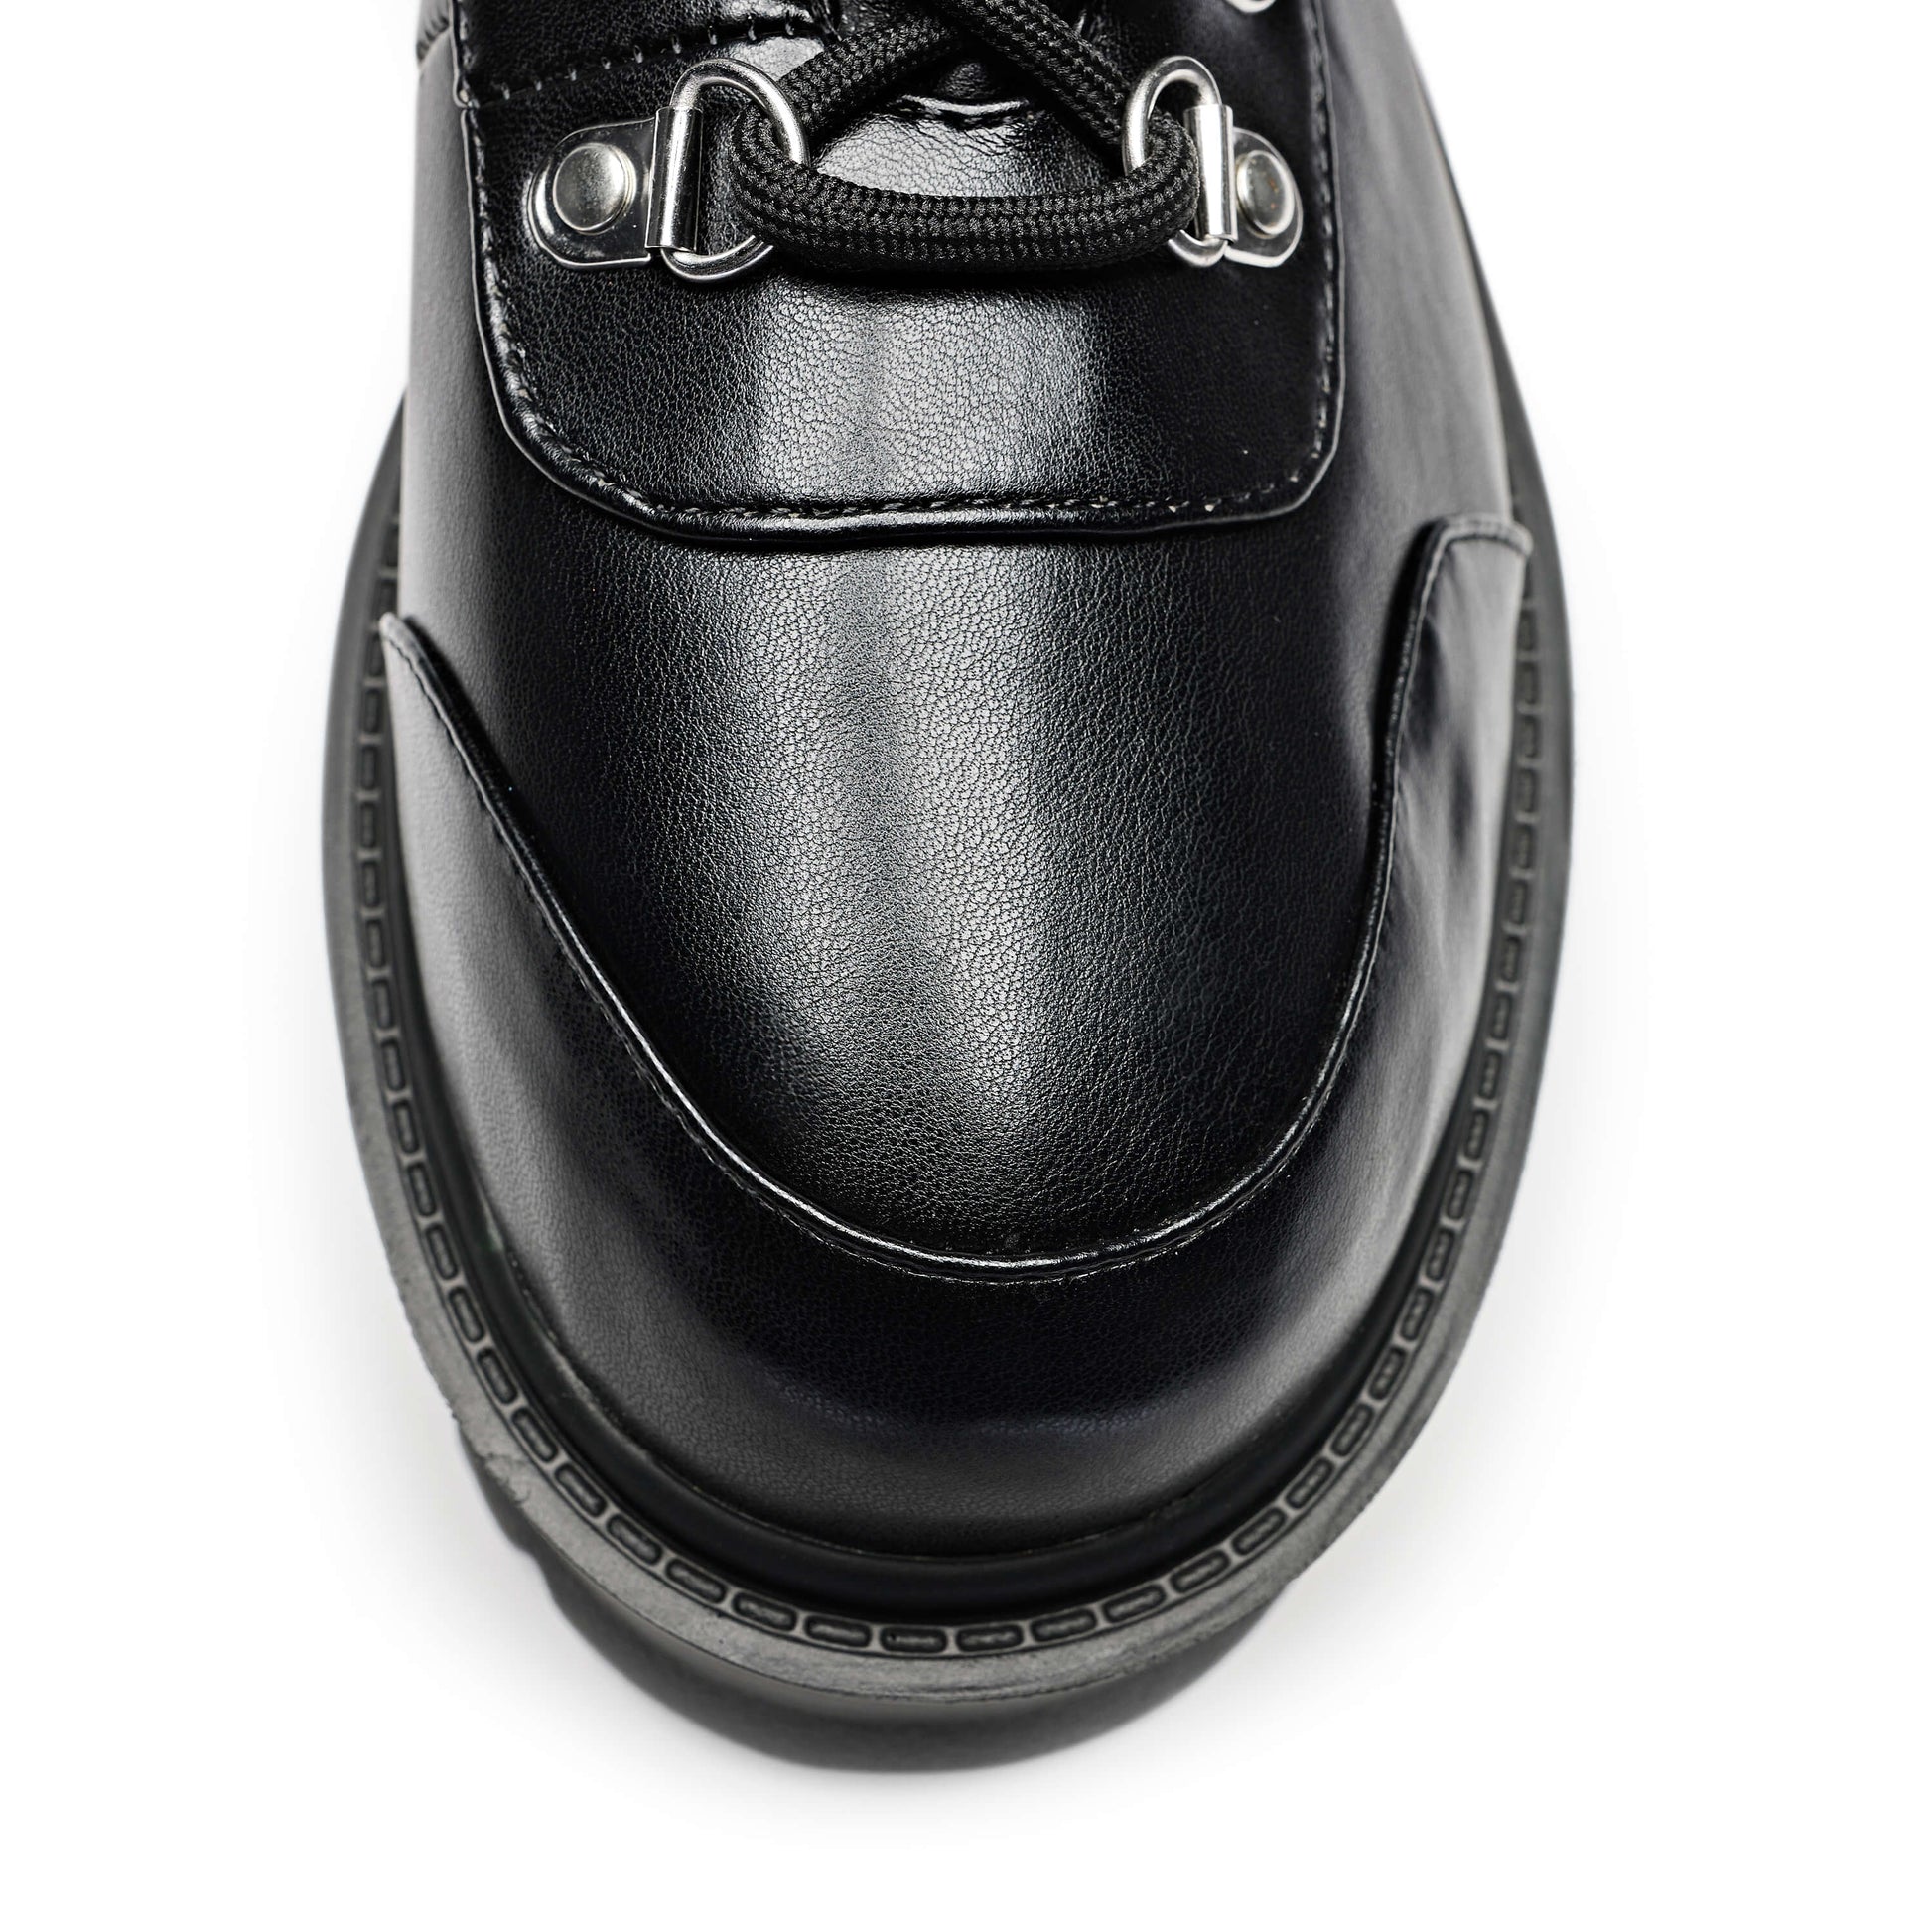 HYDRA All Black Matrix Platform Boots - Ankle Boots - KOI Footwear - Black - Top View